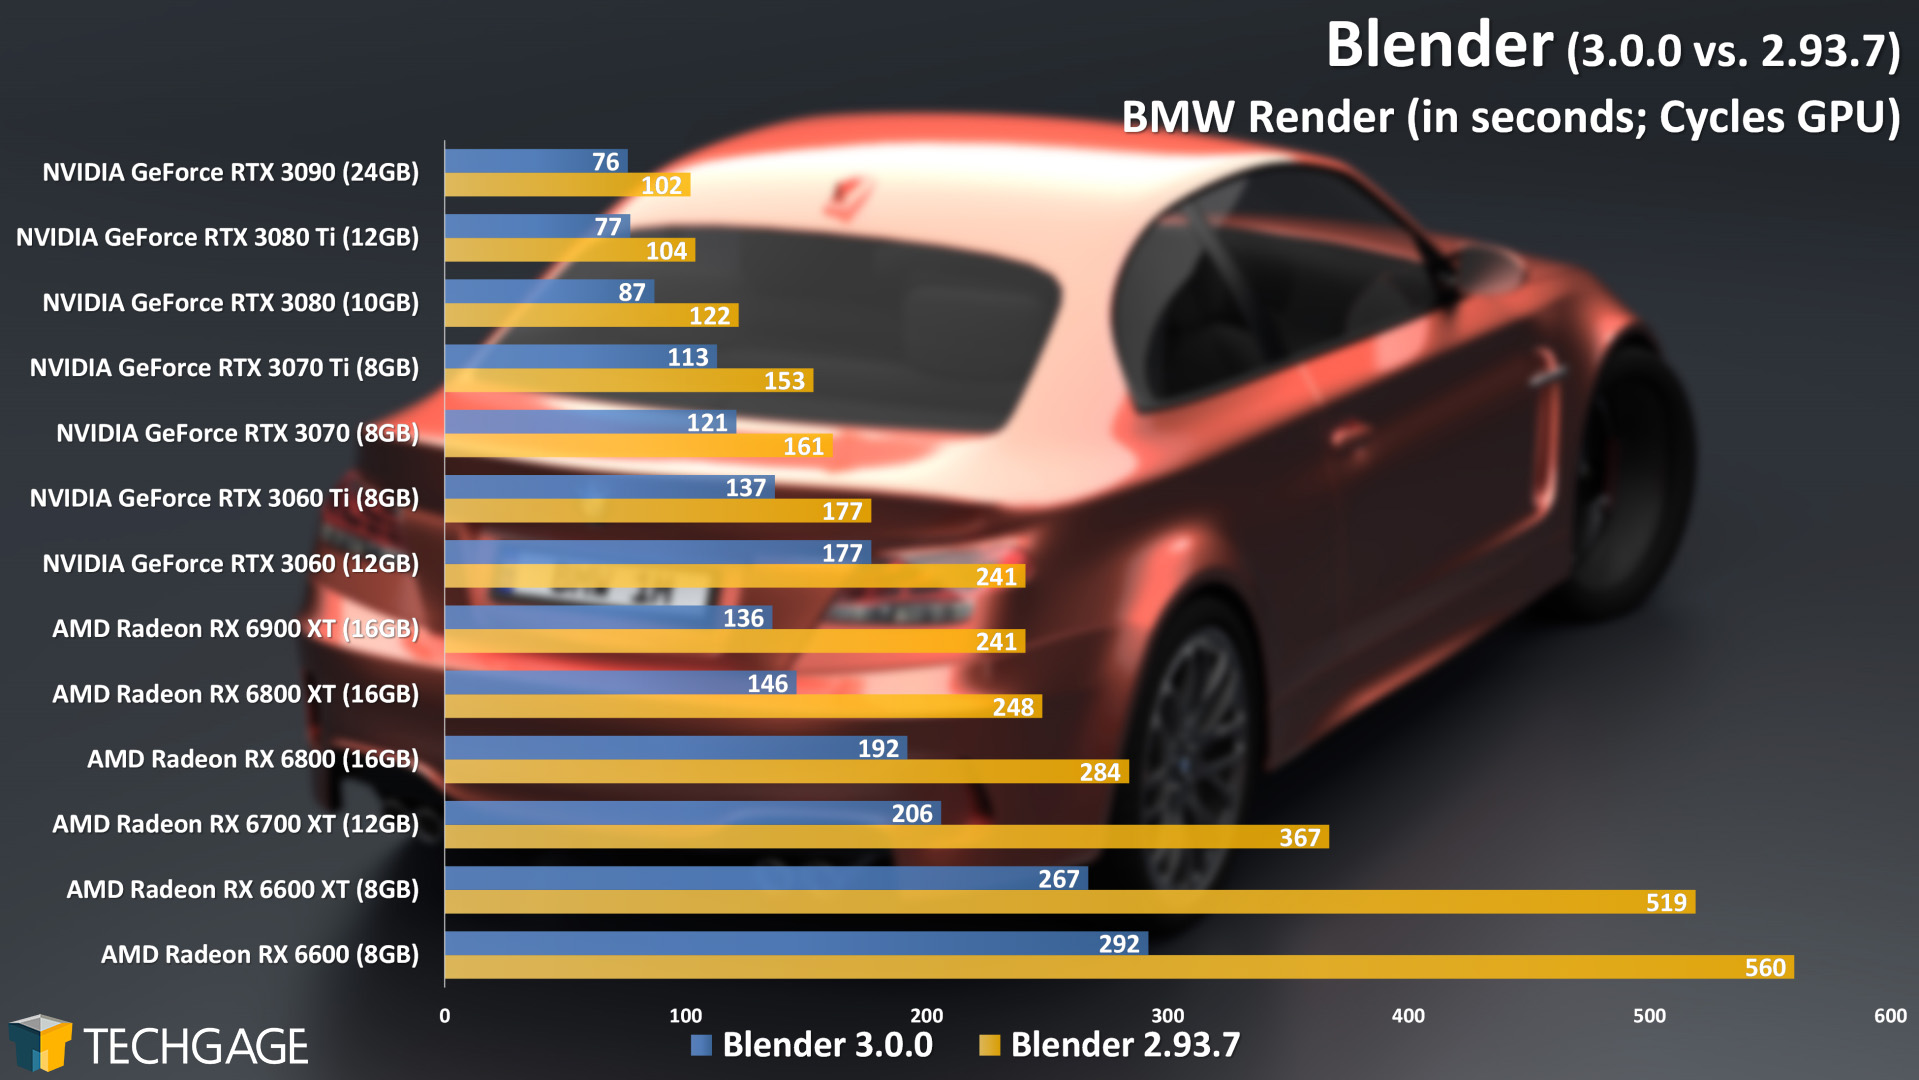 Blender-3.0.0-vs-2.93-Cycles-GPU-Performance-BMW.jpg